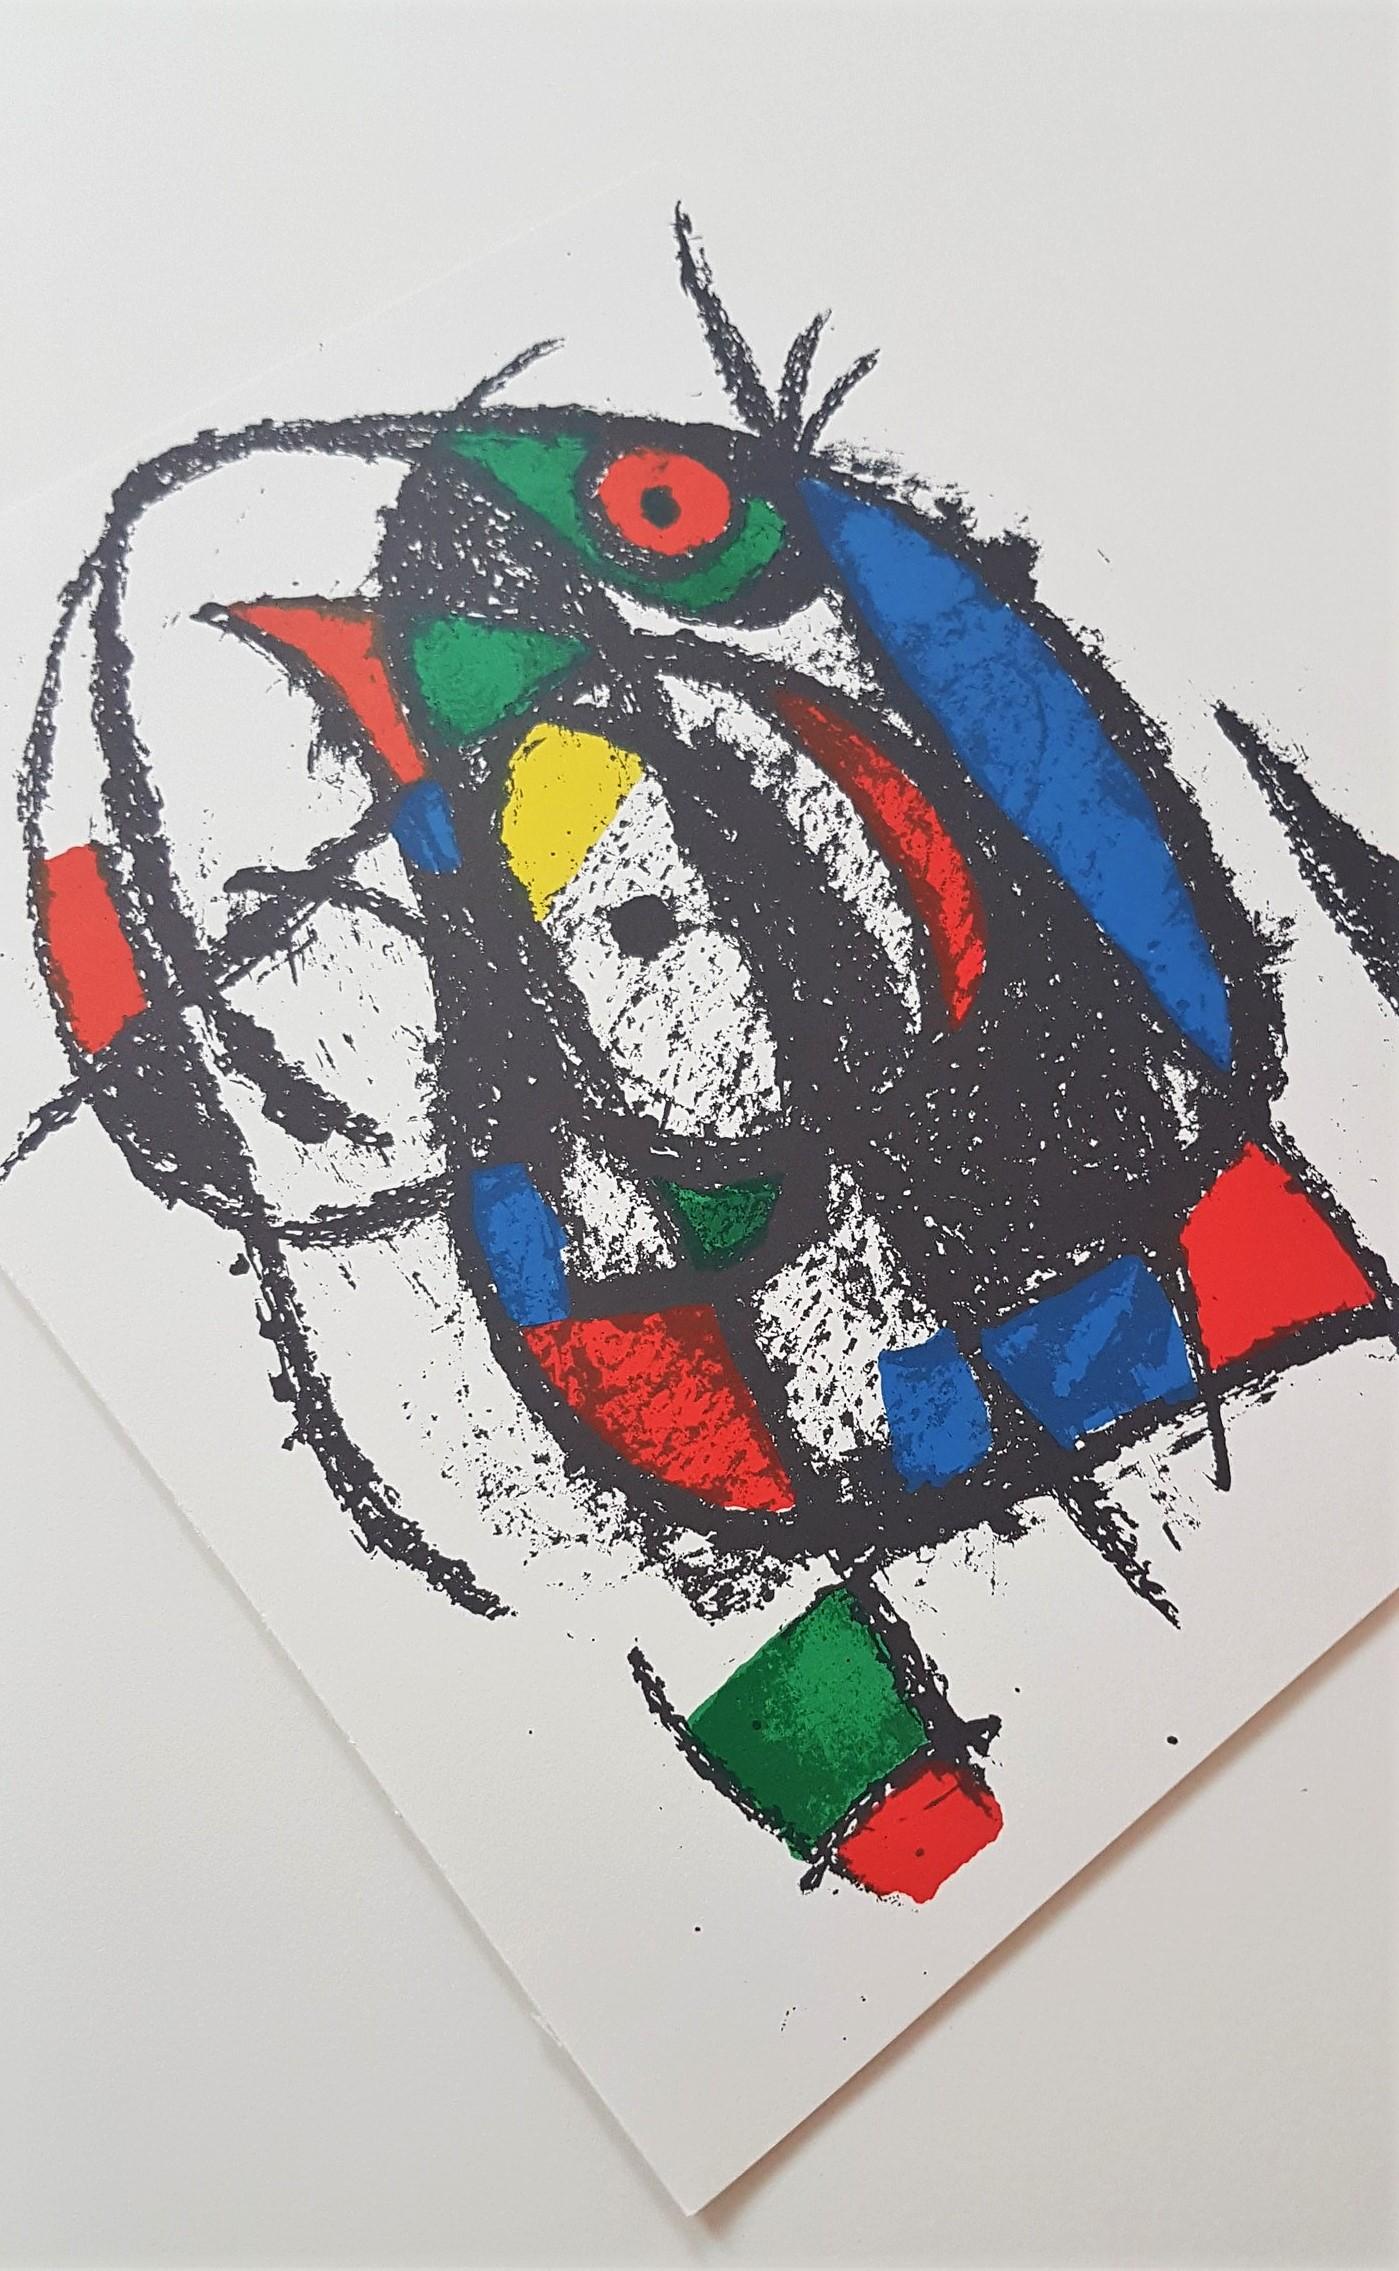 Joan Miró
Lithographie Originale IV
Color Lithograph
Year: 1977
Size: 12.5 × 9.6 inches
Catalogue Raisonné: Teixidor, Miro Lithographe III, 1964-1969, p.29
Publisher: Maeght Editeur, Paris, France 
Unsigned, Unknown Edition Size
COA